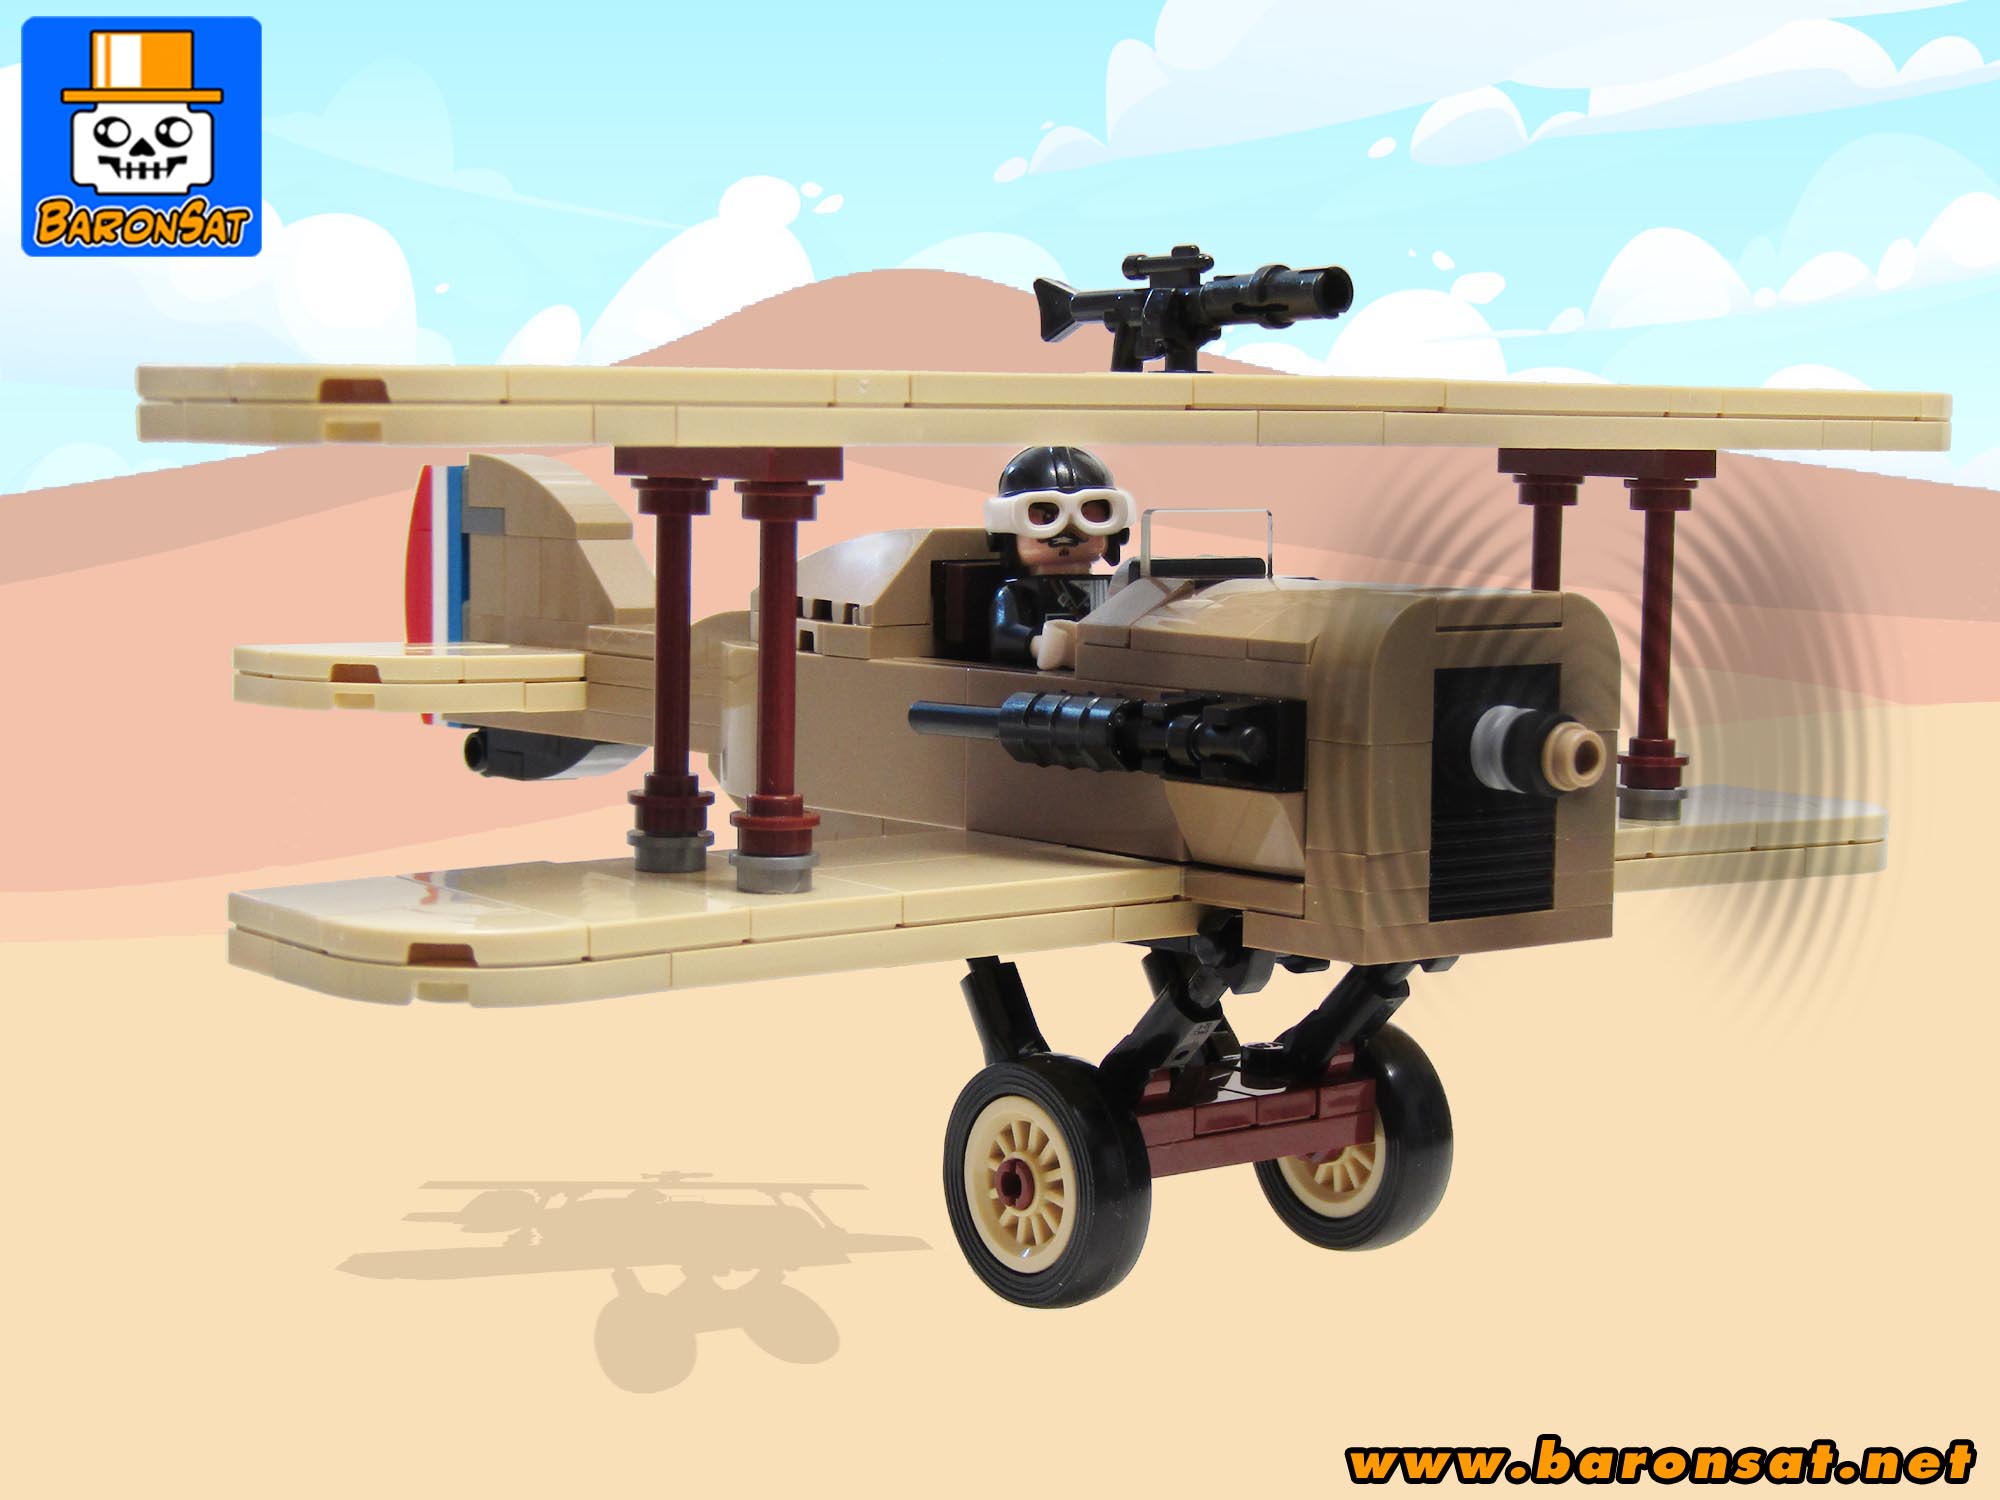 Adventurers Biplane Redux Lego moc